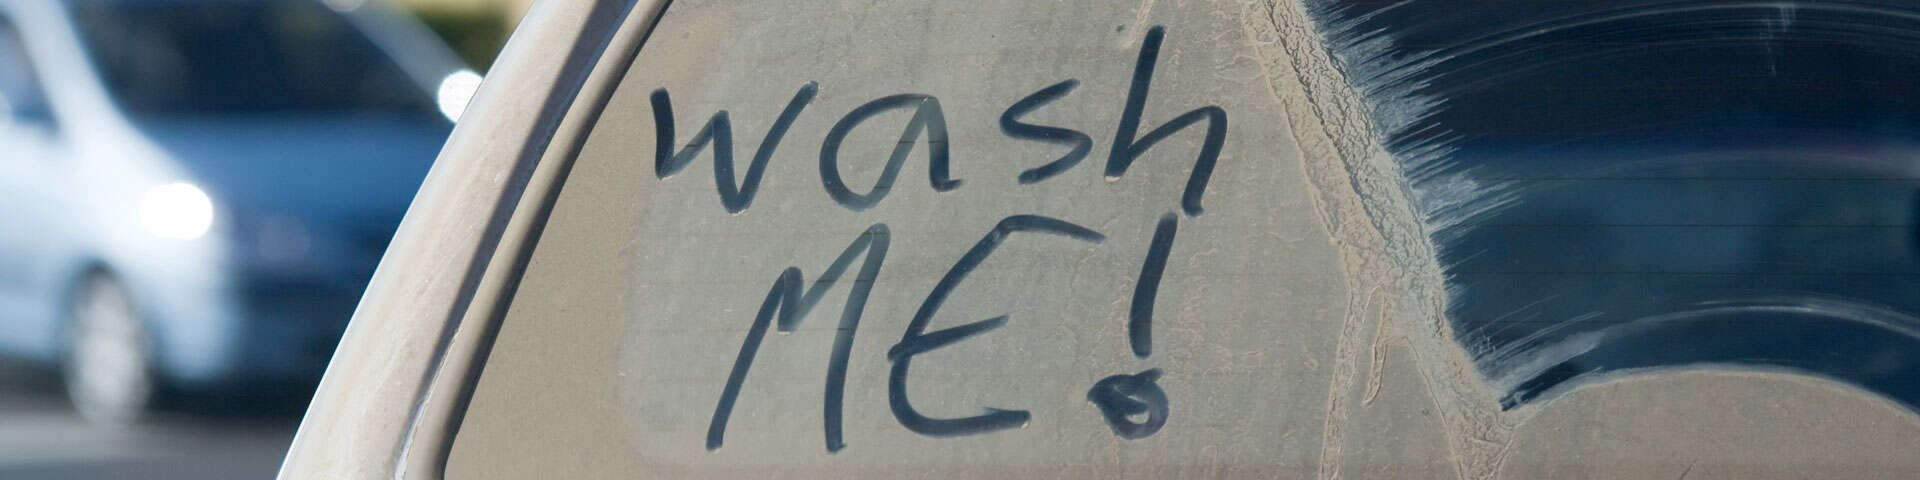 "Wash me" phrase on a dirty car window